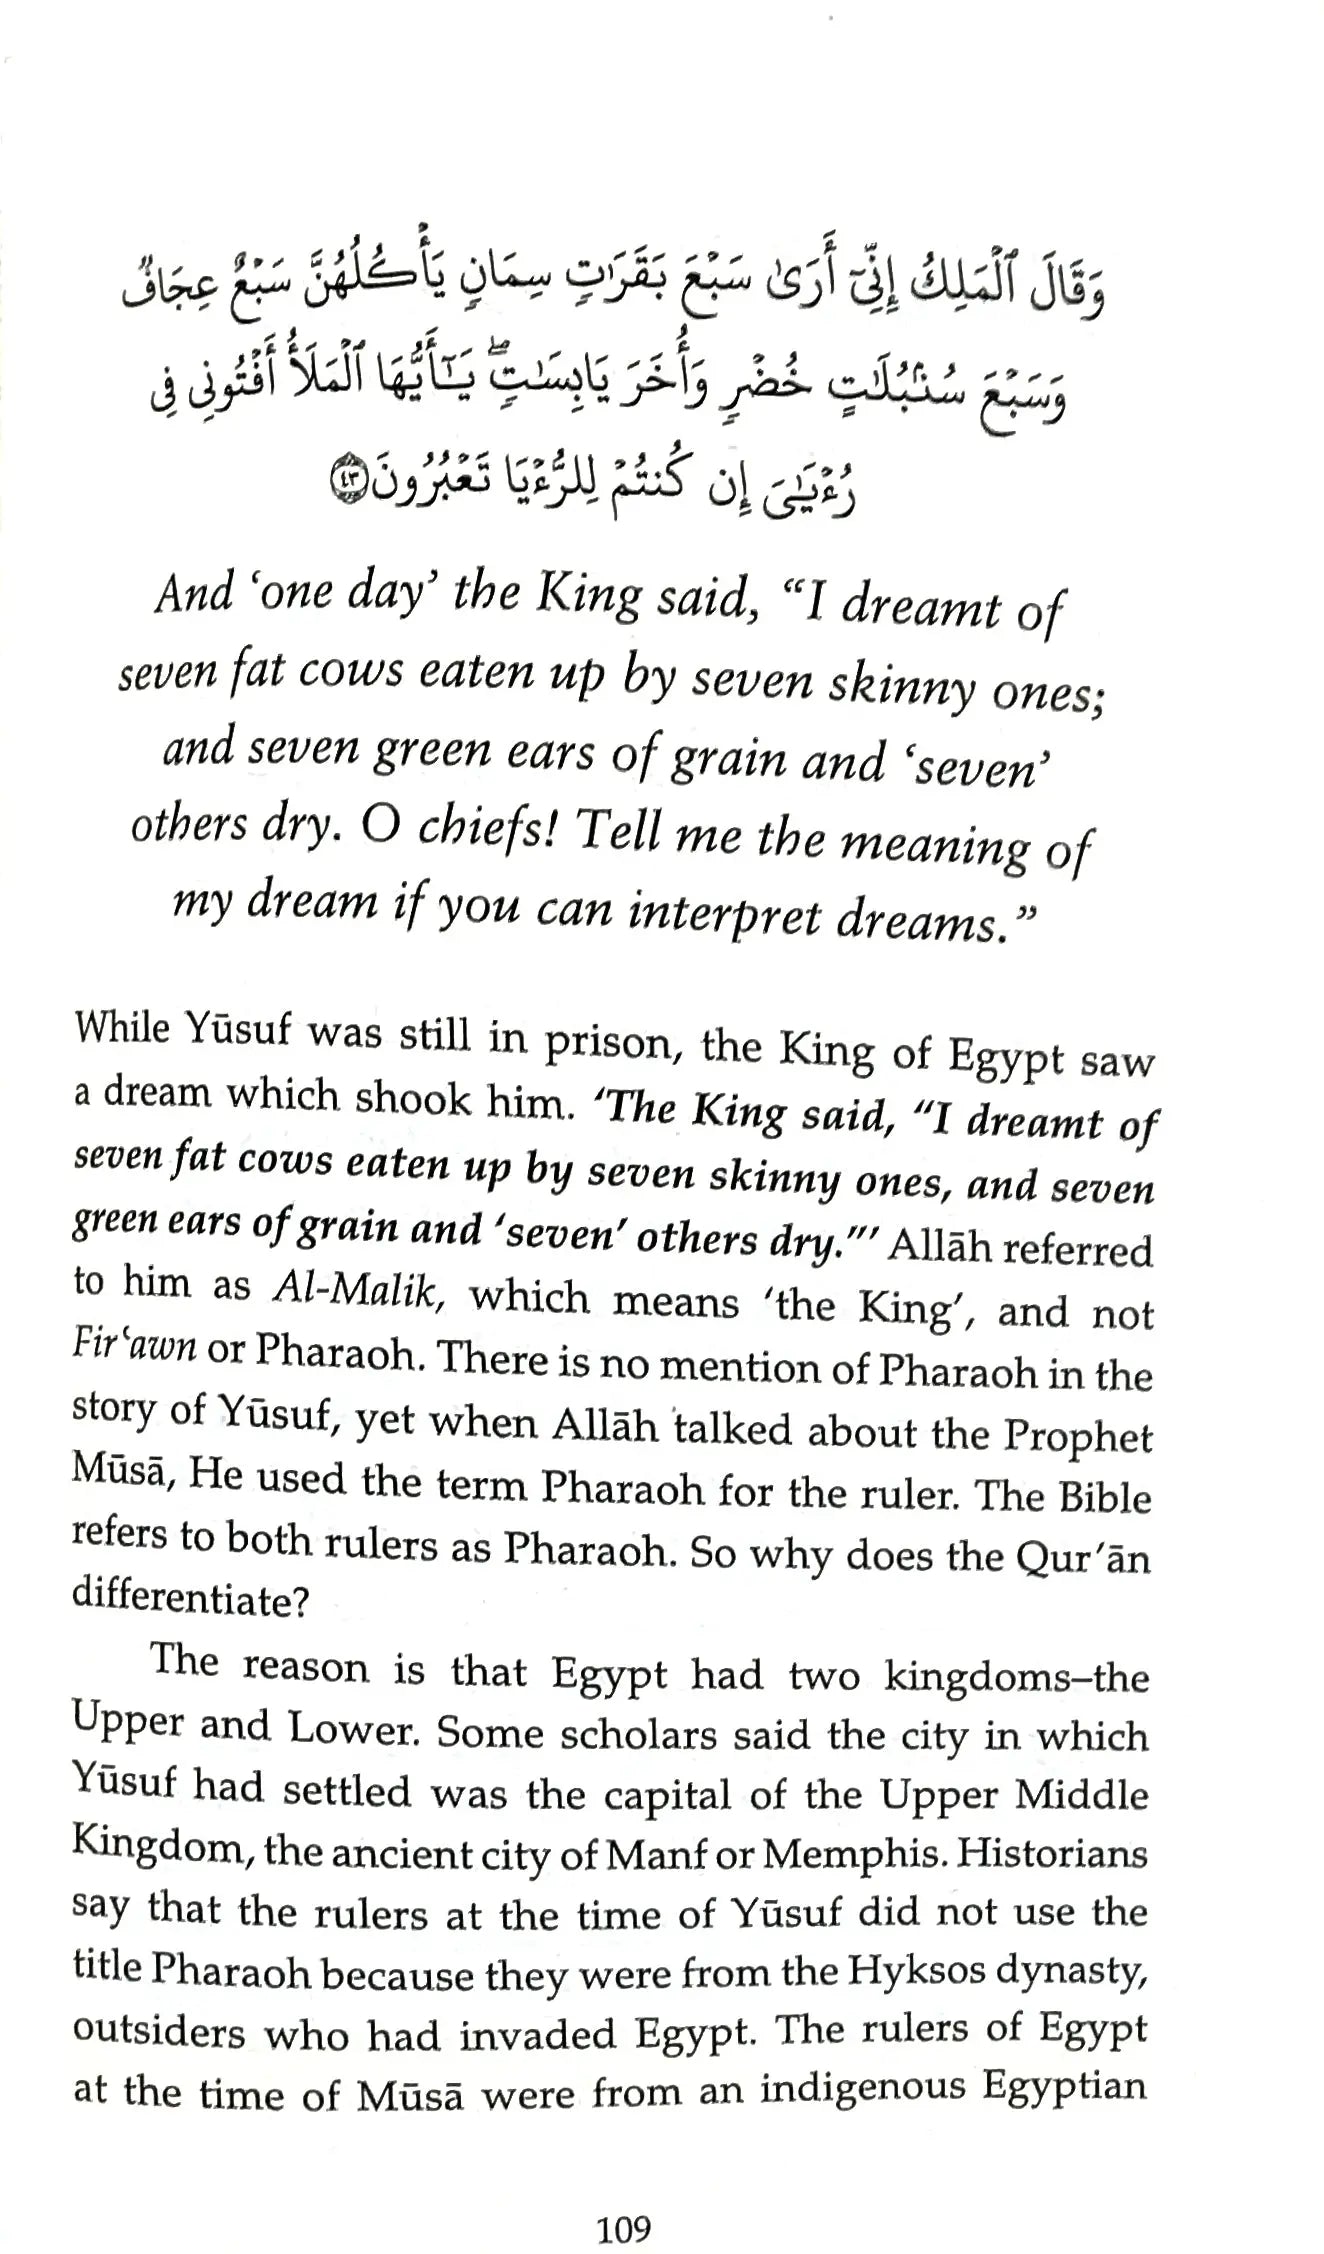 Lessons from Surah Yusuf (Paperback) - alifthebookstore